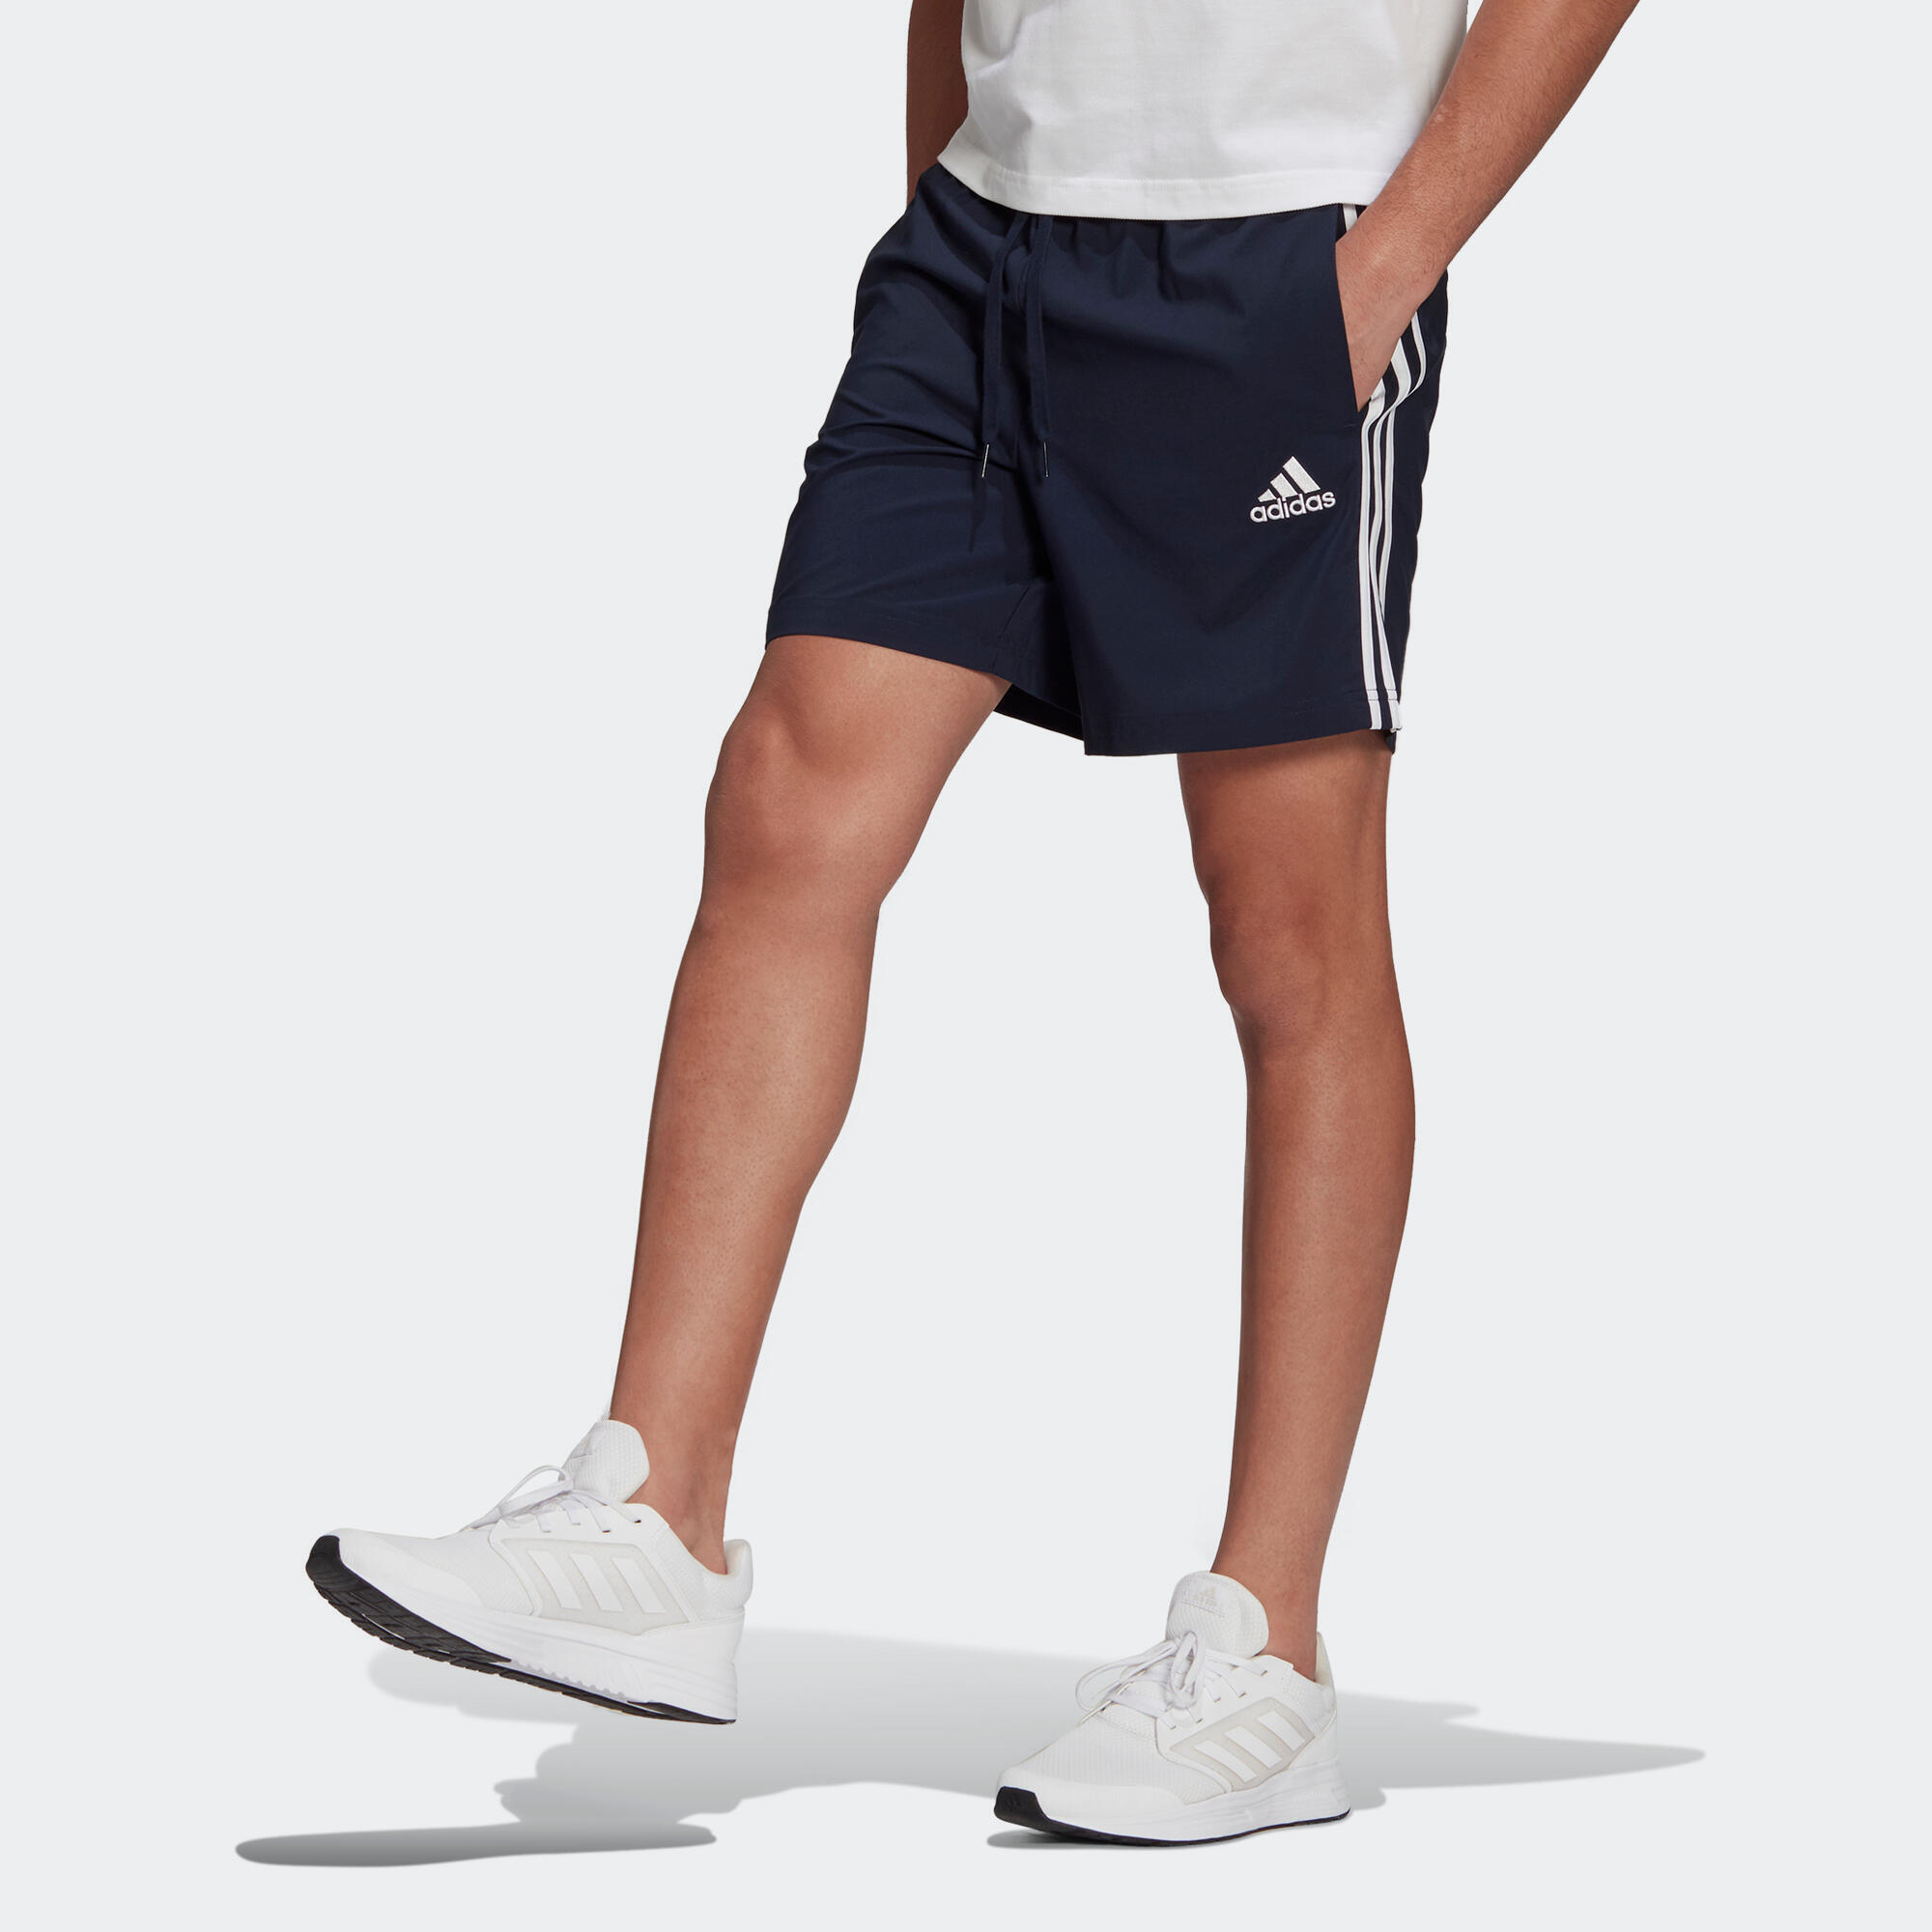 Adidas shorts. Шорты adidas adidas Essentials 3-Stripes Chelsea shorts. Sport Essentials adidas шорты мужские. Шорты adidas AEROREADY. Adidas AEROREADY Essentials.